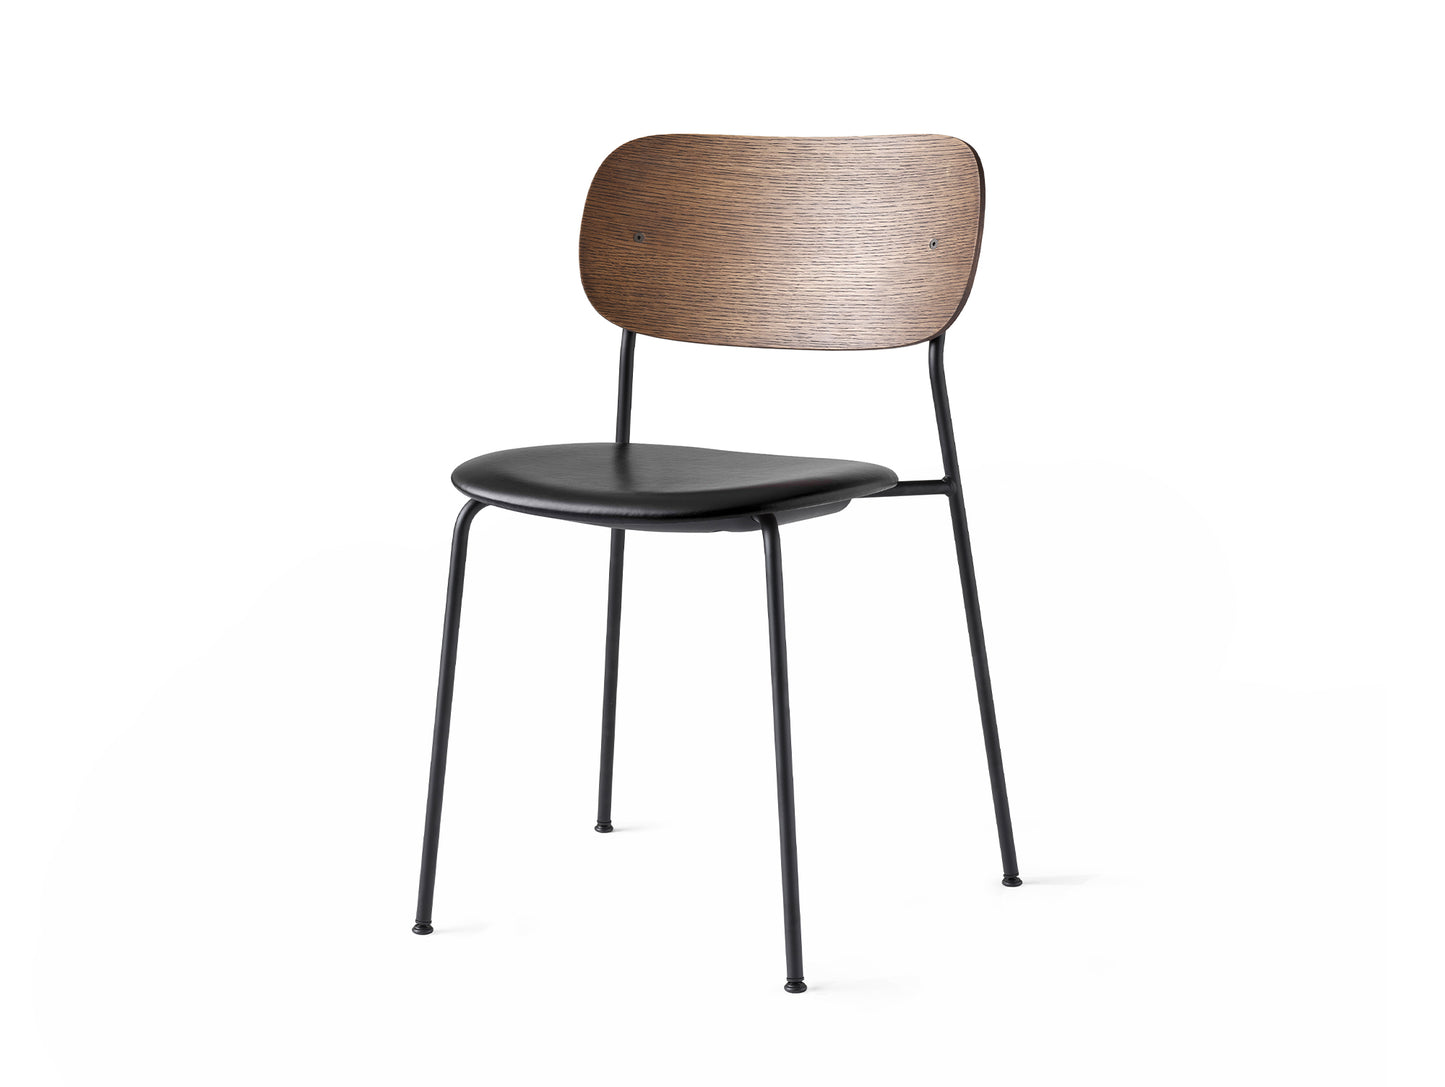 Co Dining Chair Upholstered by Menu - Without Armrest / Black Powder Coated Steel / Dark Oak / Dakar Black Leather